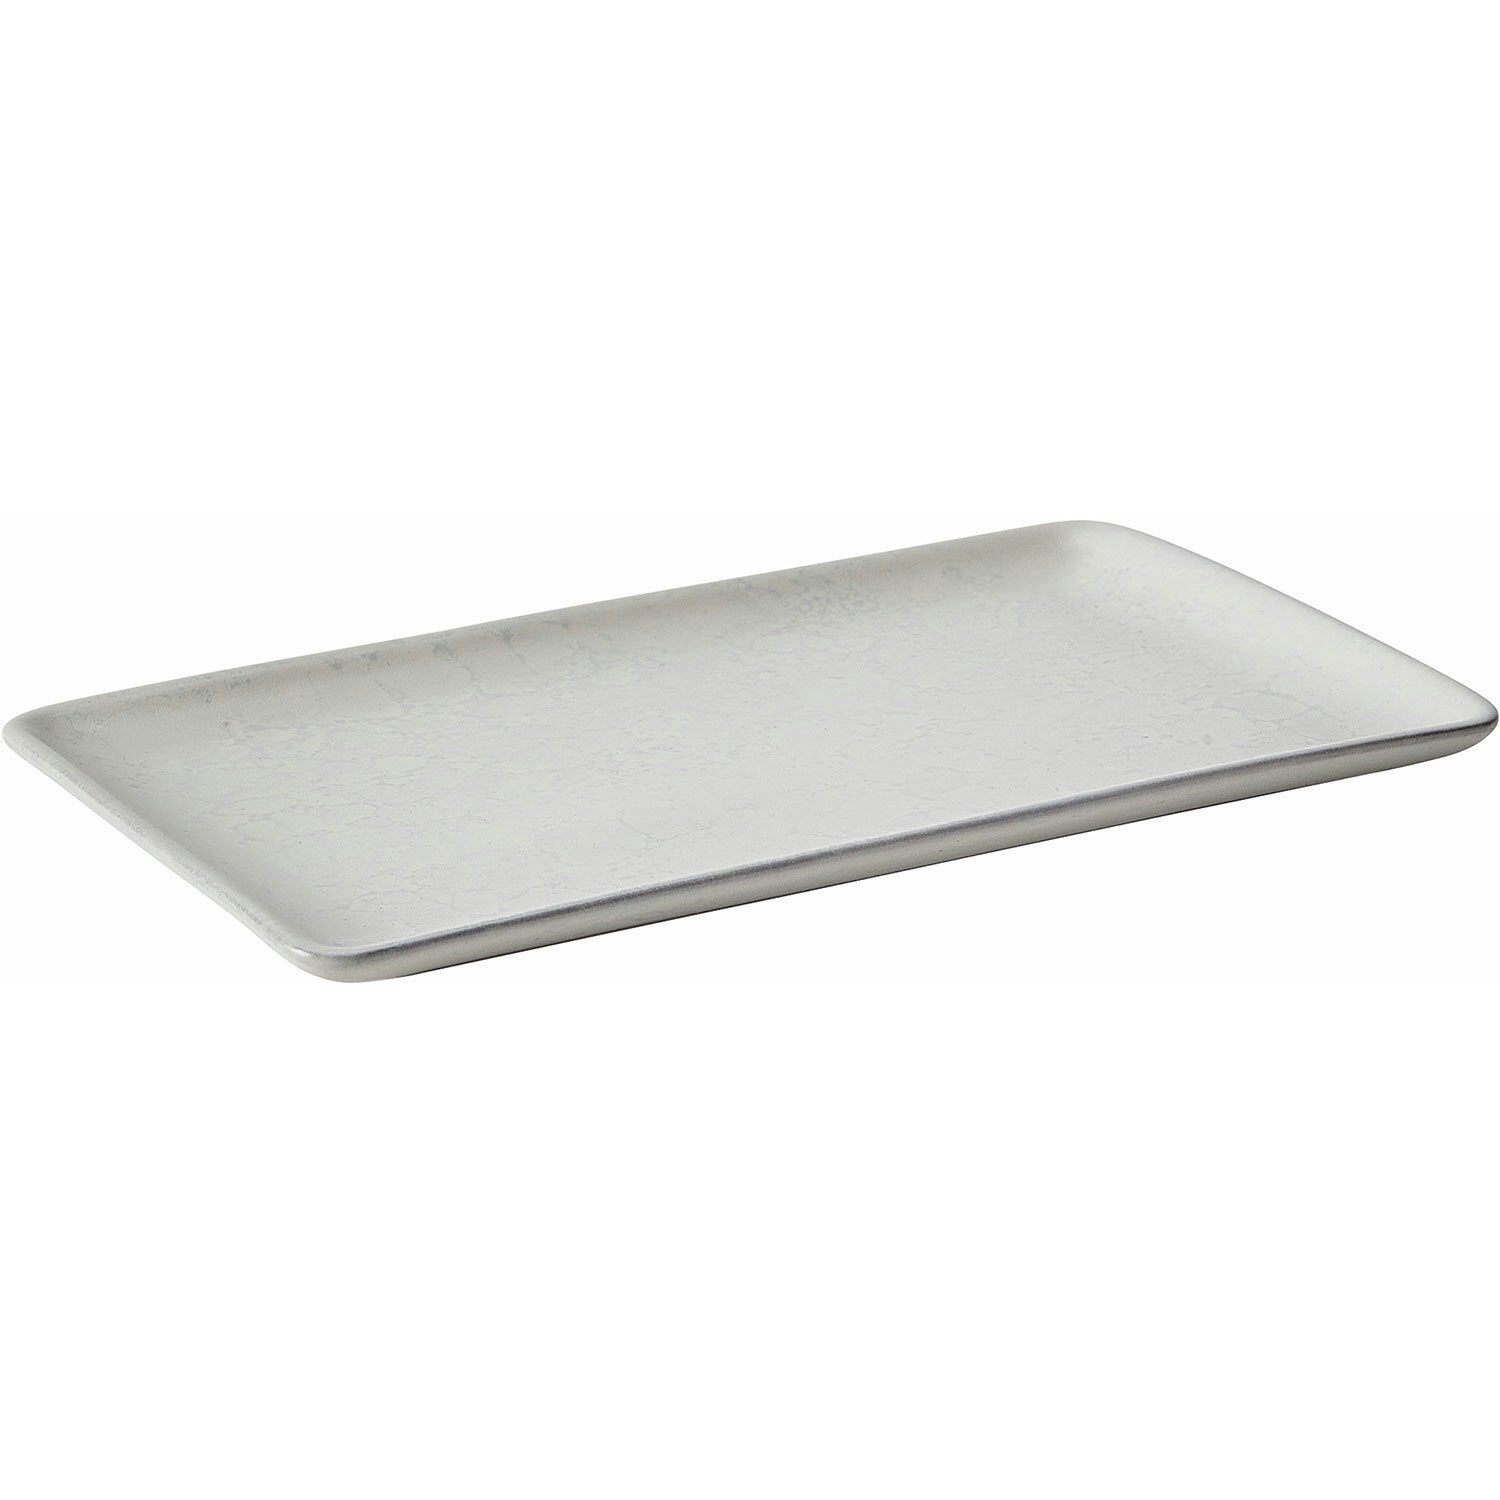 https://royaldesign.com/image/2/aida-raw-arctic-white-rectangular-plate-235x15cm-1